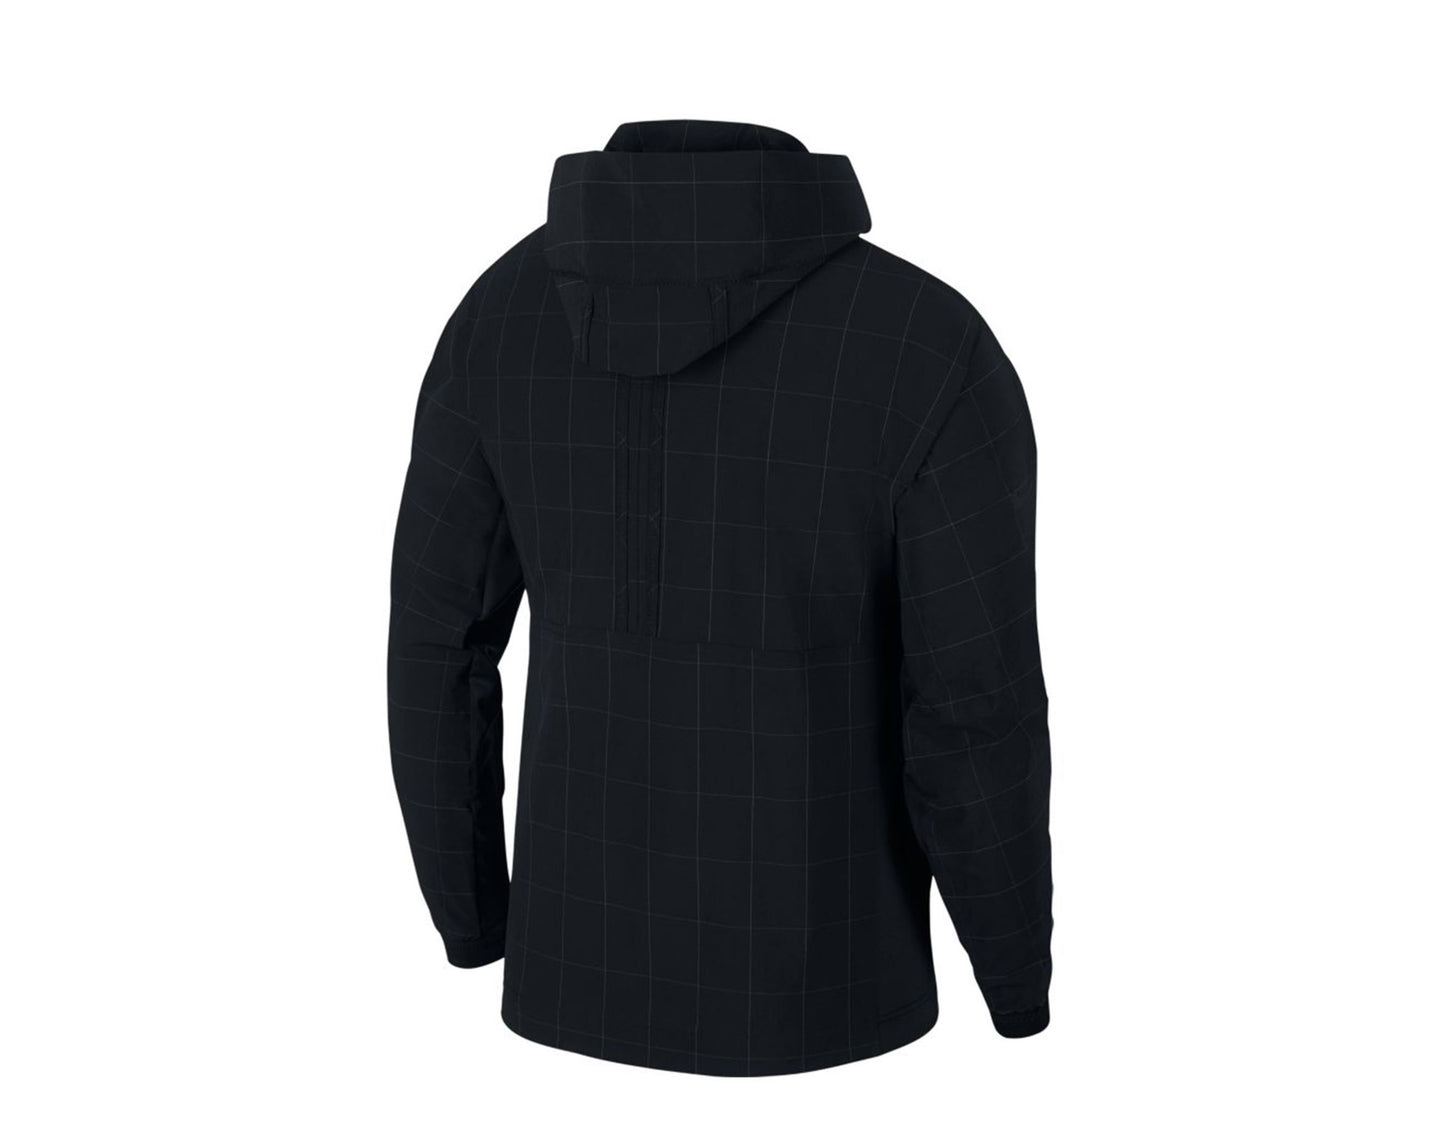 Nike Sportswear Tech Pack Hooded Woven Black/White Men's Jacket BV4437-010